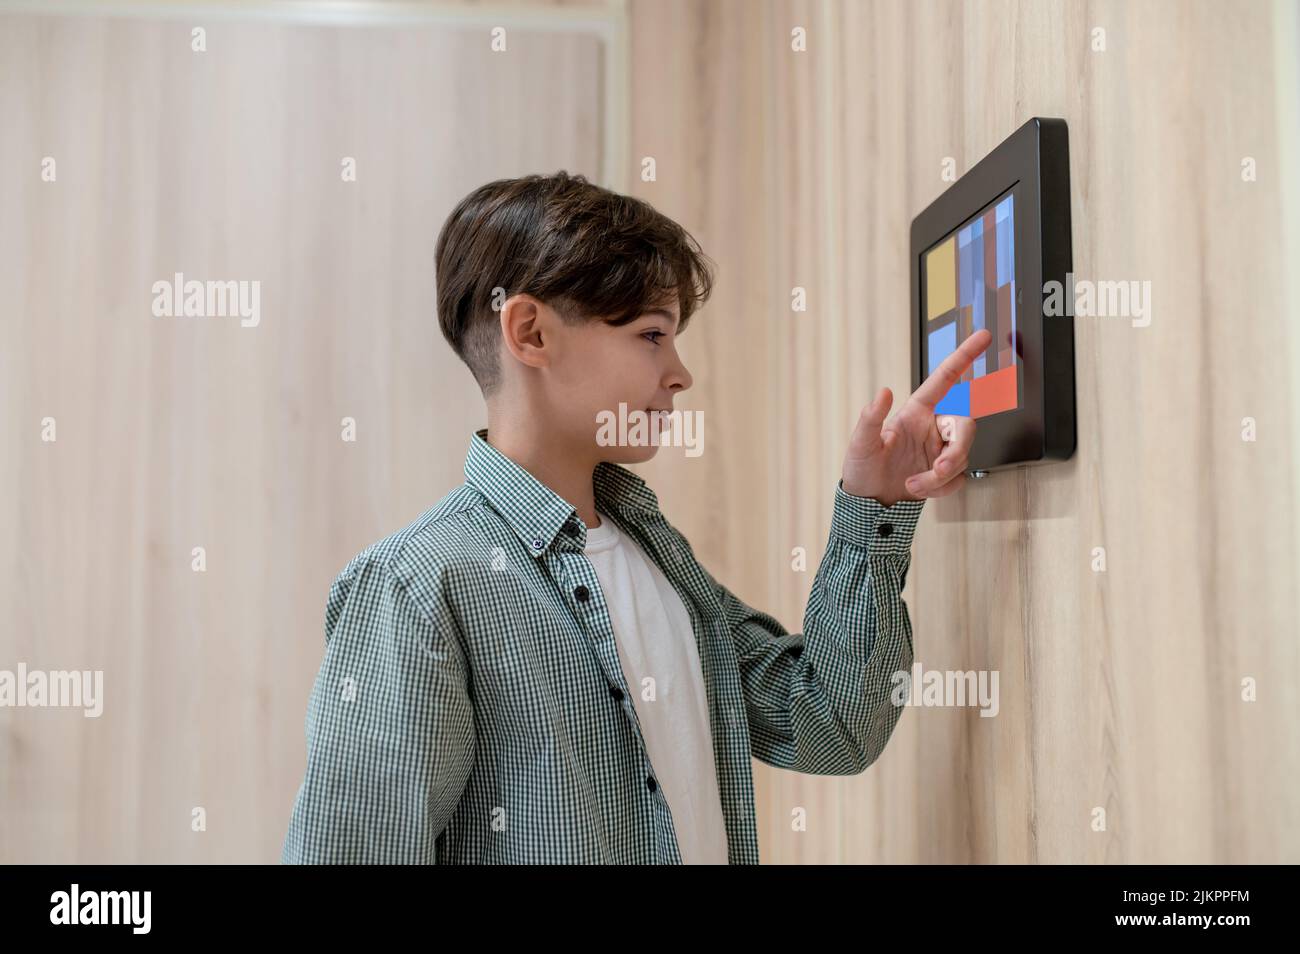 A boy touching screen of a sensor panel Stock Photo